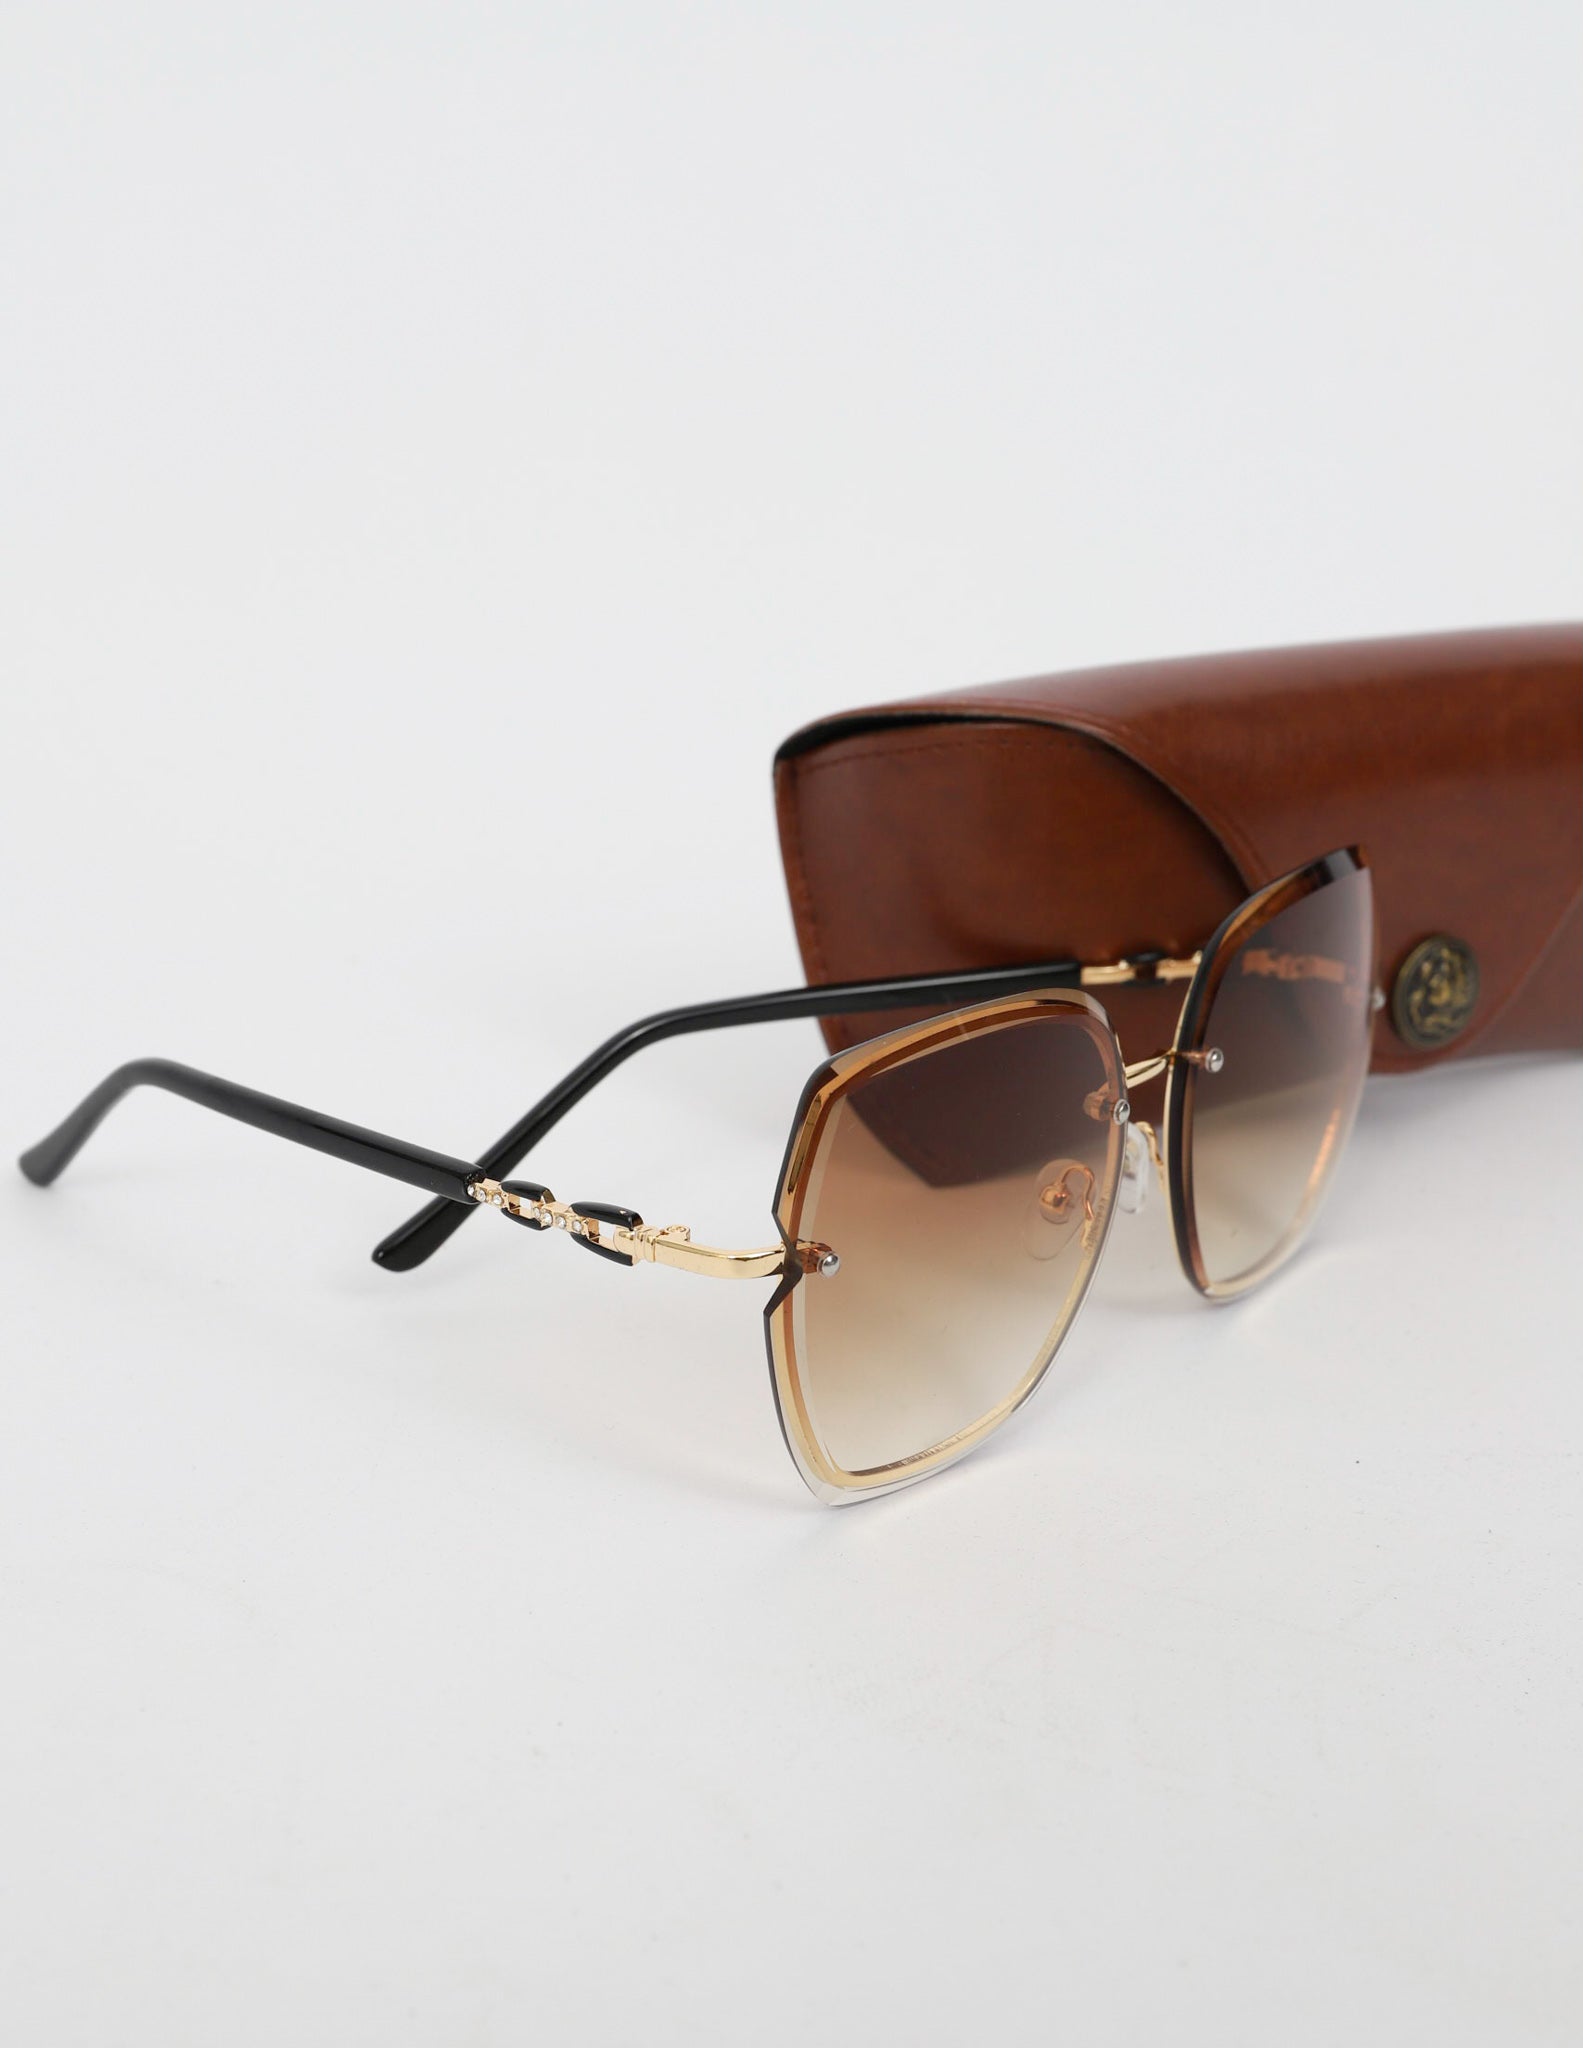 SG00019Gold-sunglasses-accessories